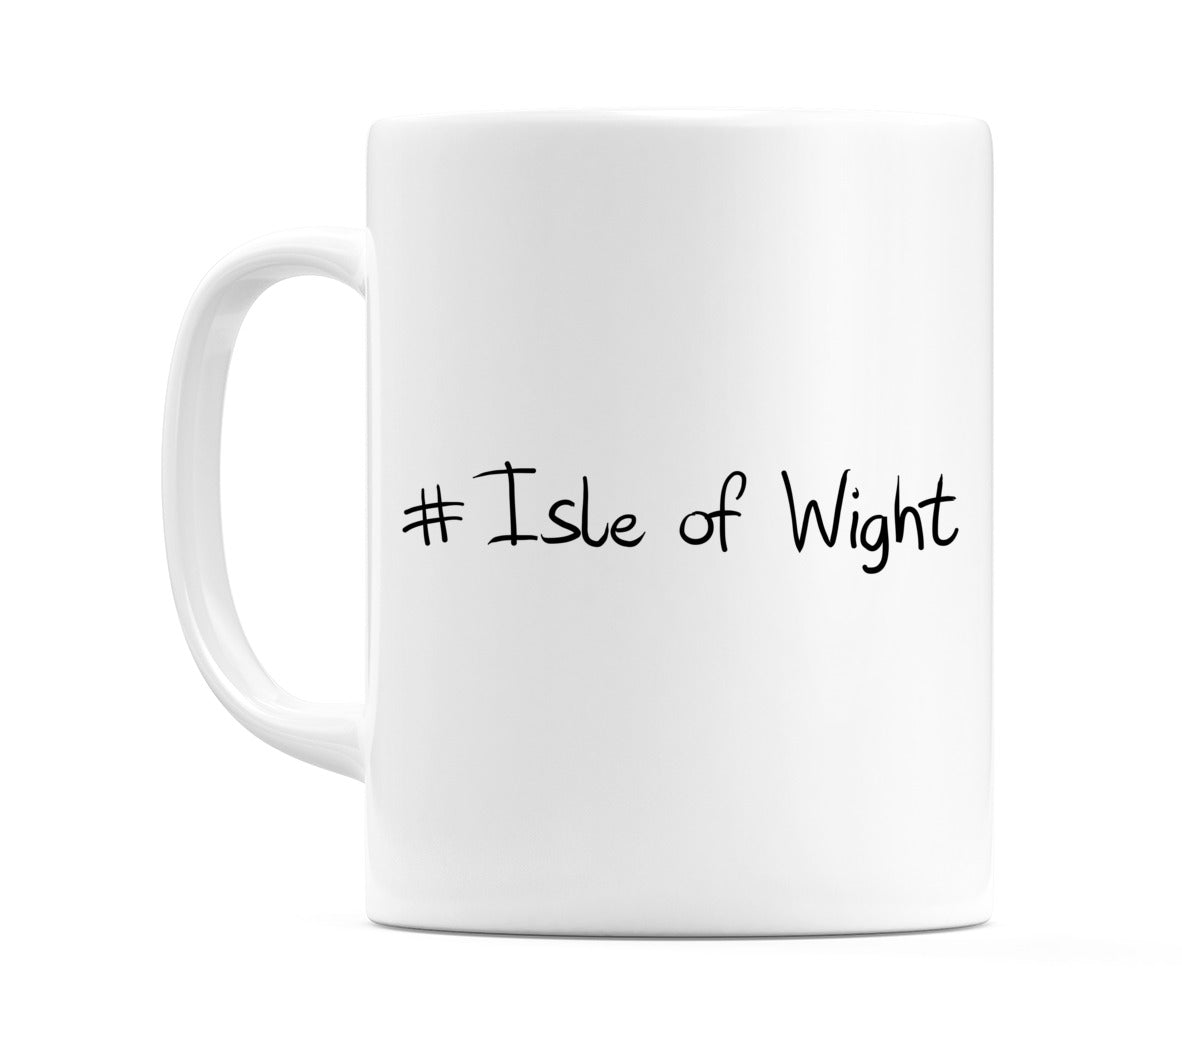 #Isle of Wight Mug